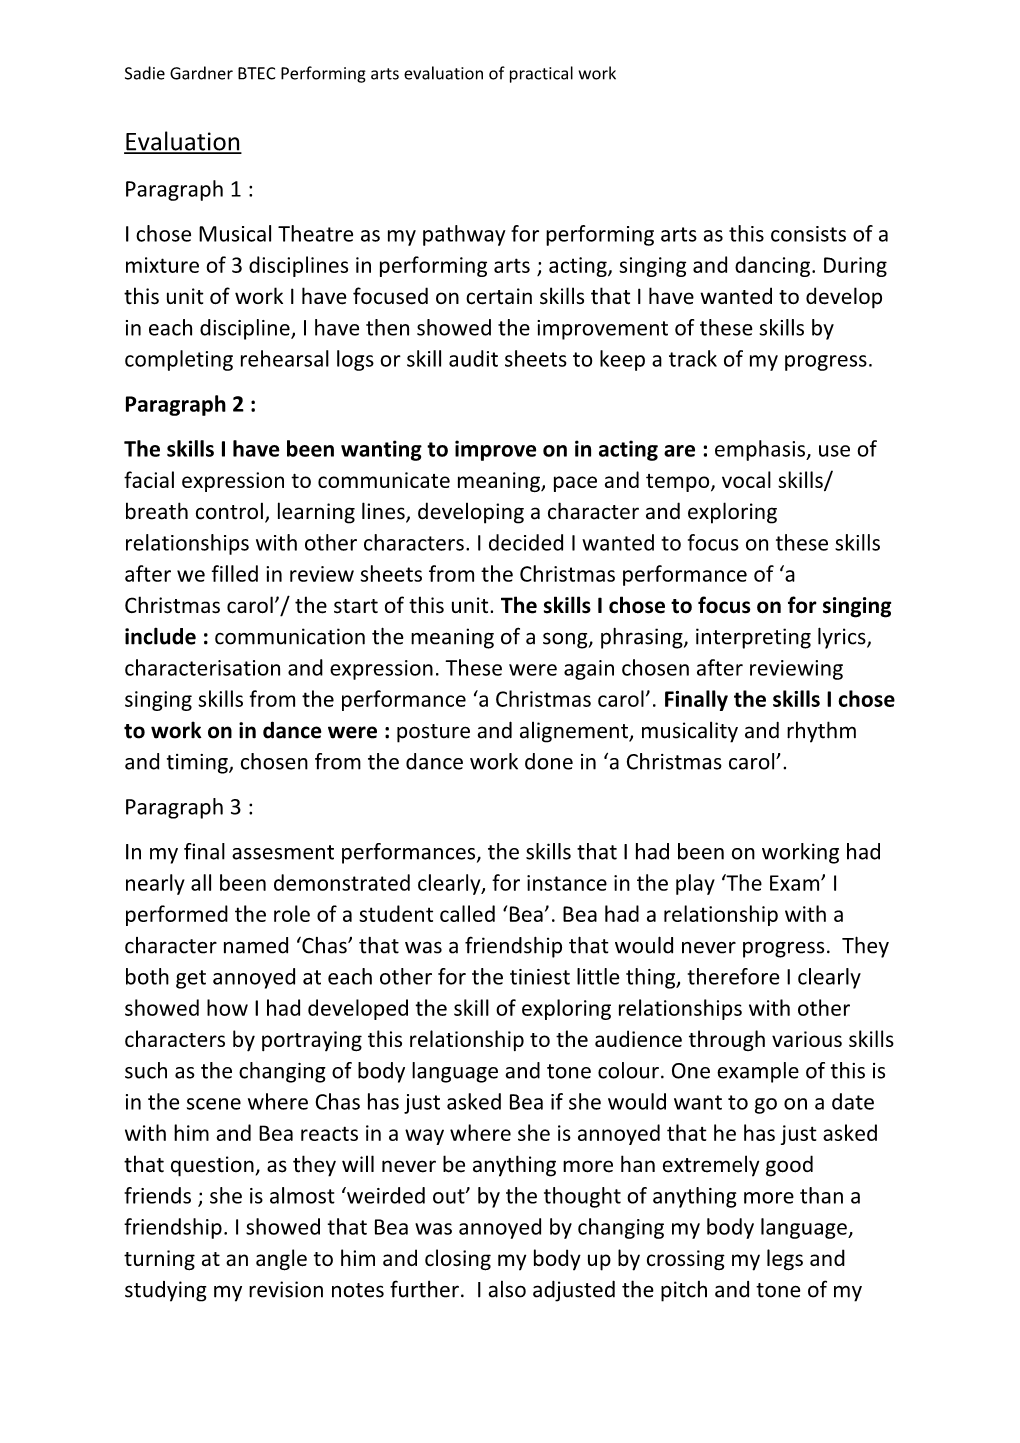 Sadie Gardner BTEC Performing Arts Evaluation of Practical Work